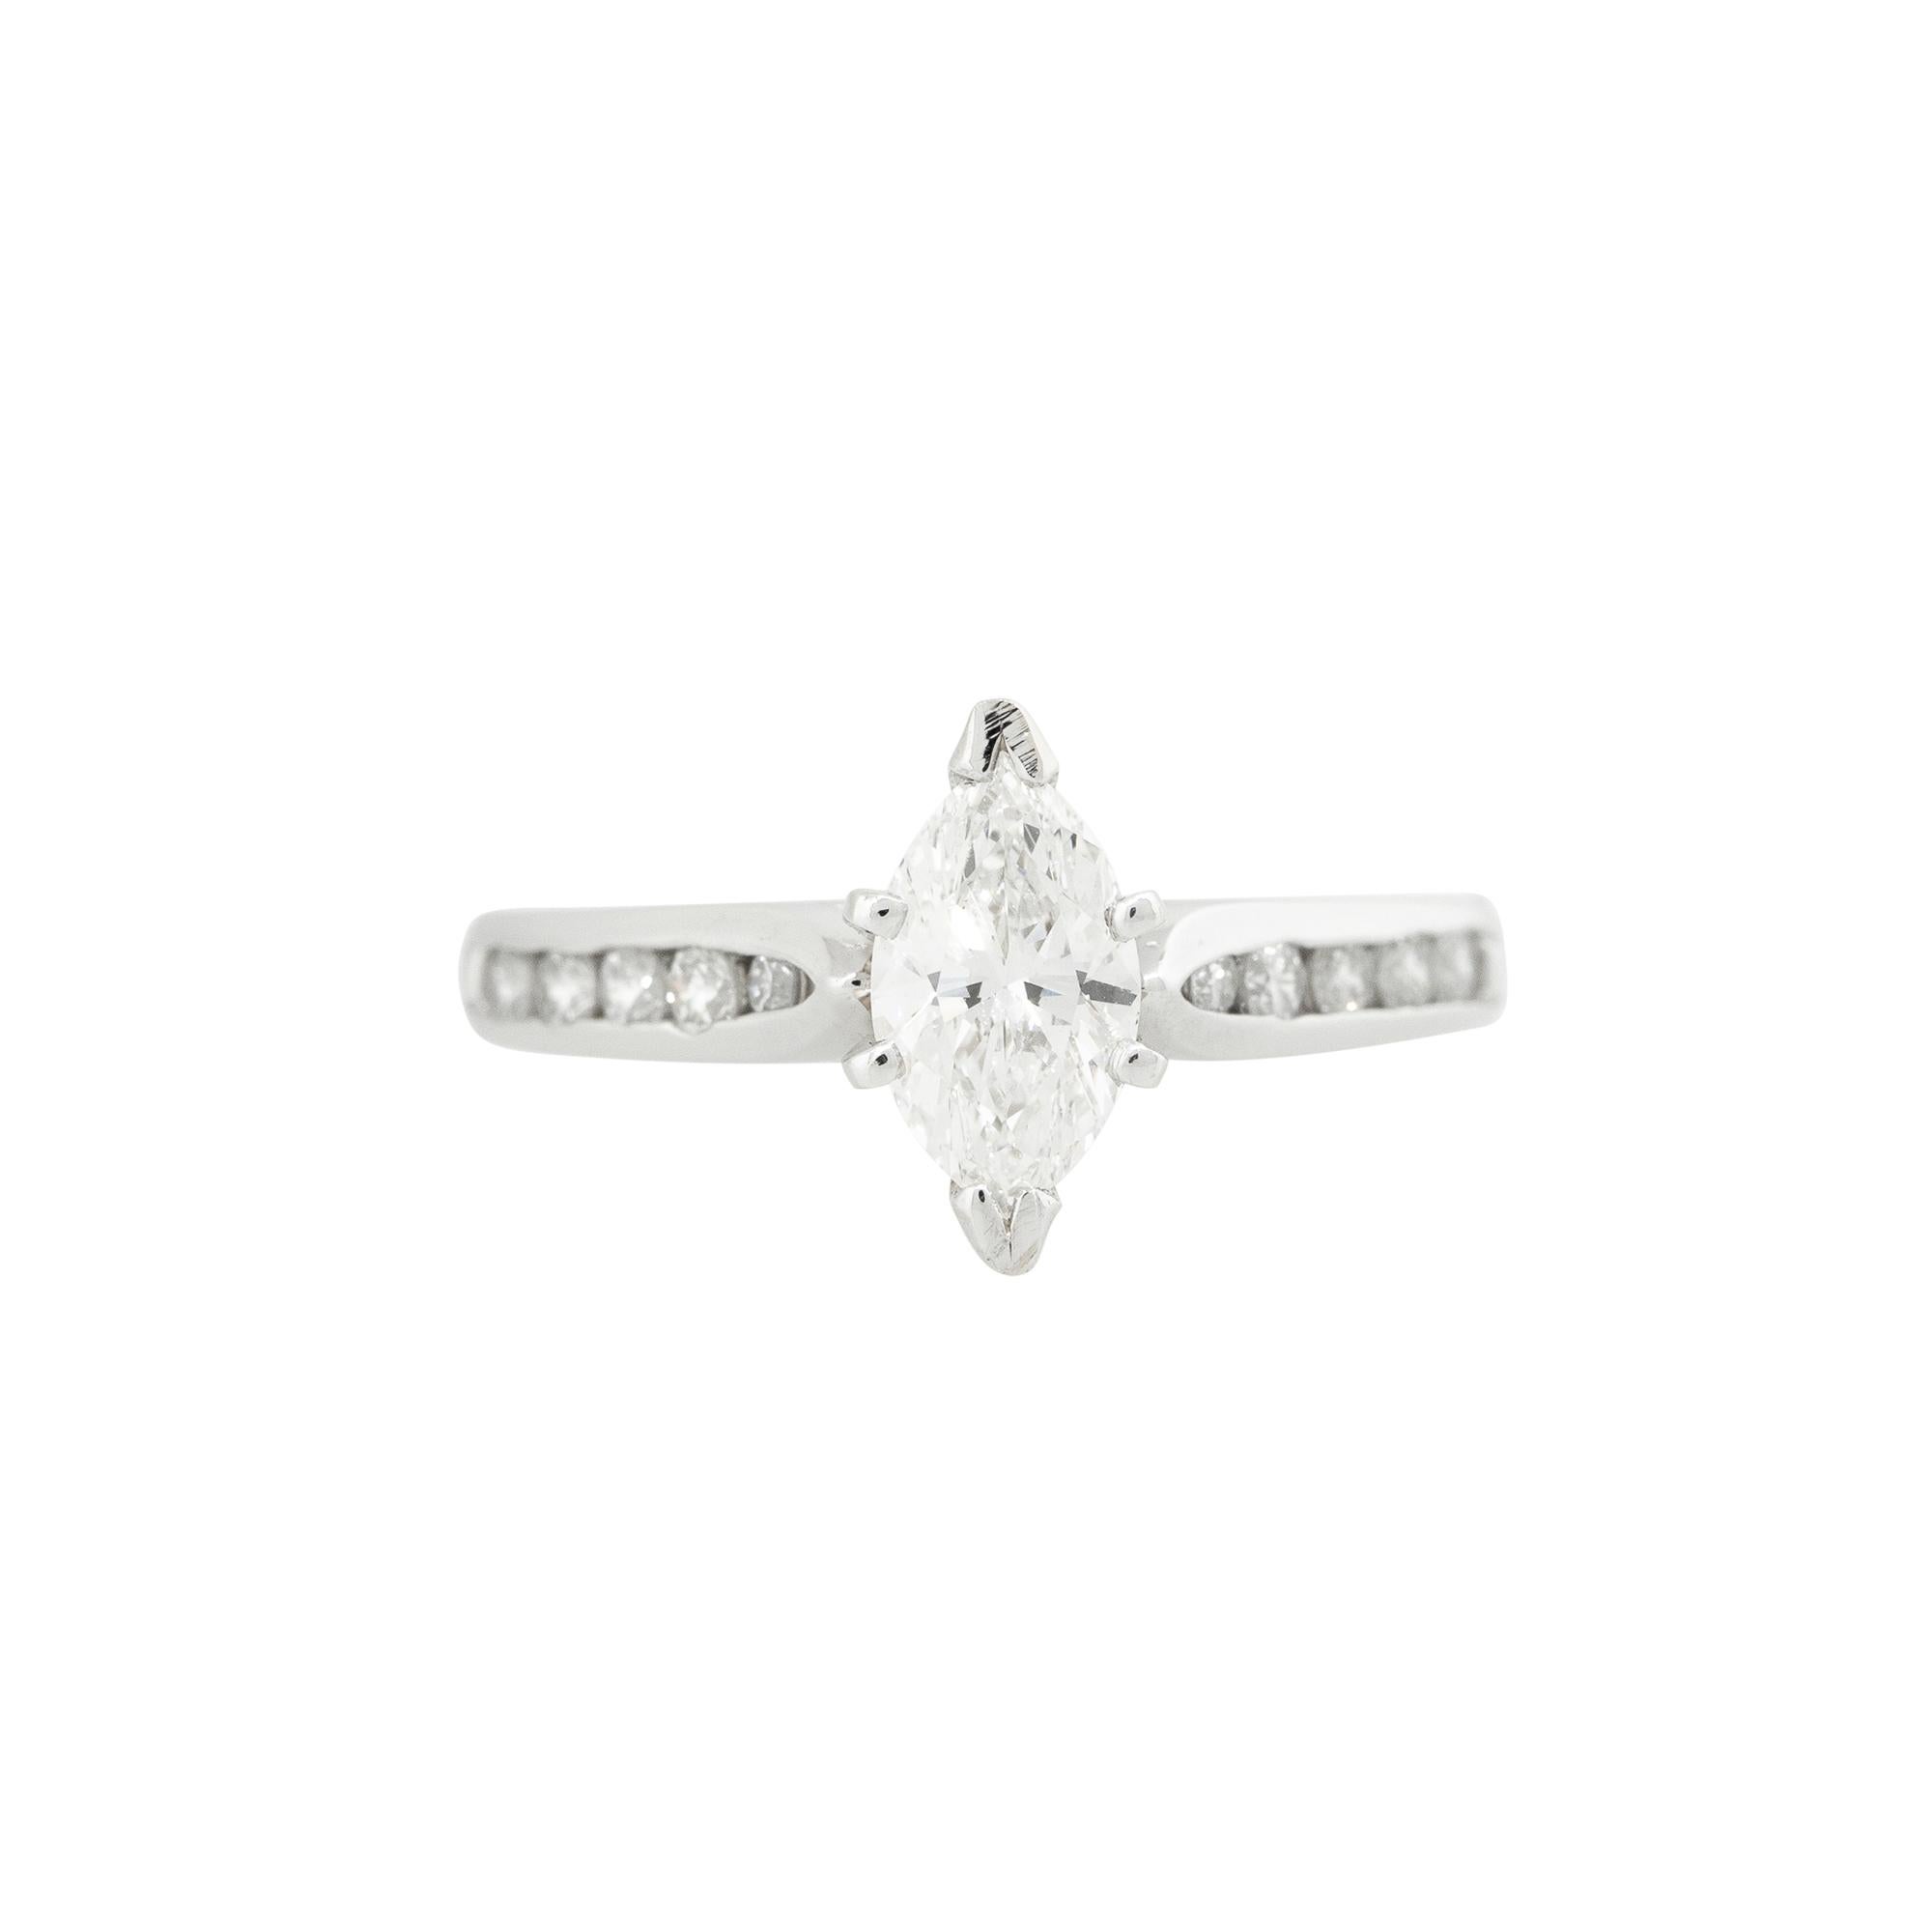 GIA Certified Platinum 0.98ctw Marquise Cut Diamond Engagement Ring
Style: Marquise Diamond Engagement Ring
Material: Platinum
Main Diamond Details: The main diamond is a 0.73ct Marquise shape stone. Main diamond is GIA certified: #2175145990.